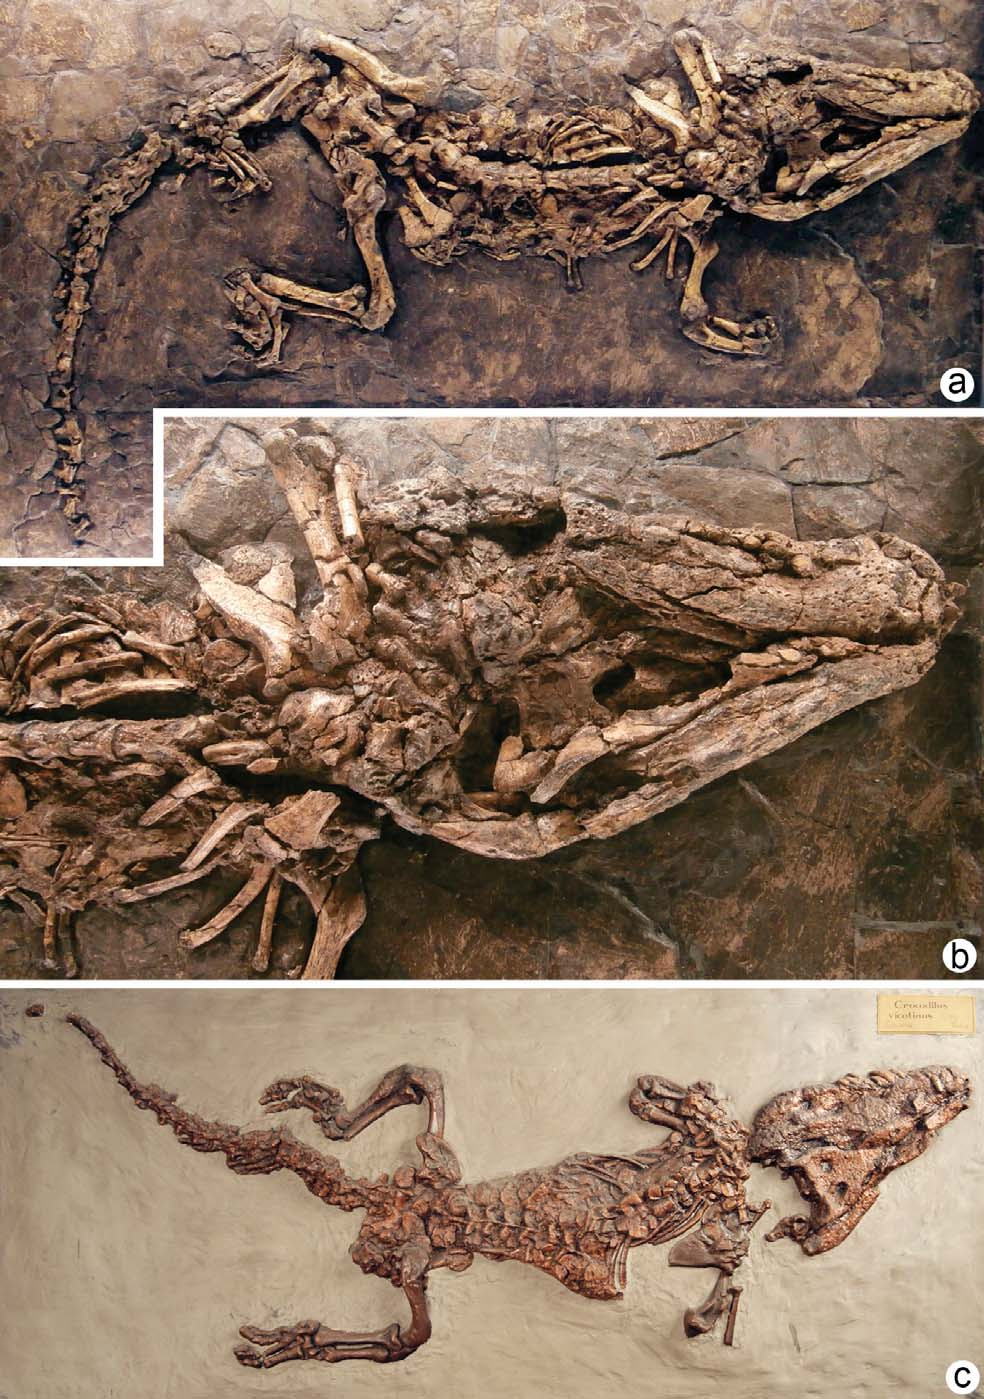 L. Giusberti, L. Del Favero & G. Roghi FIG. 3 - a) Asiatosuchus?depressifrons. Lenght 135 cm. Complete skeleton in ventral view. MCSNV V.7097.